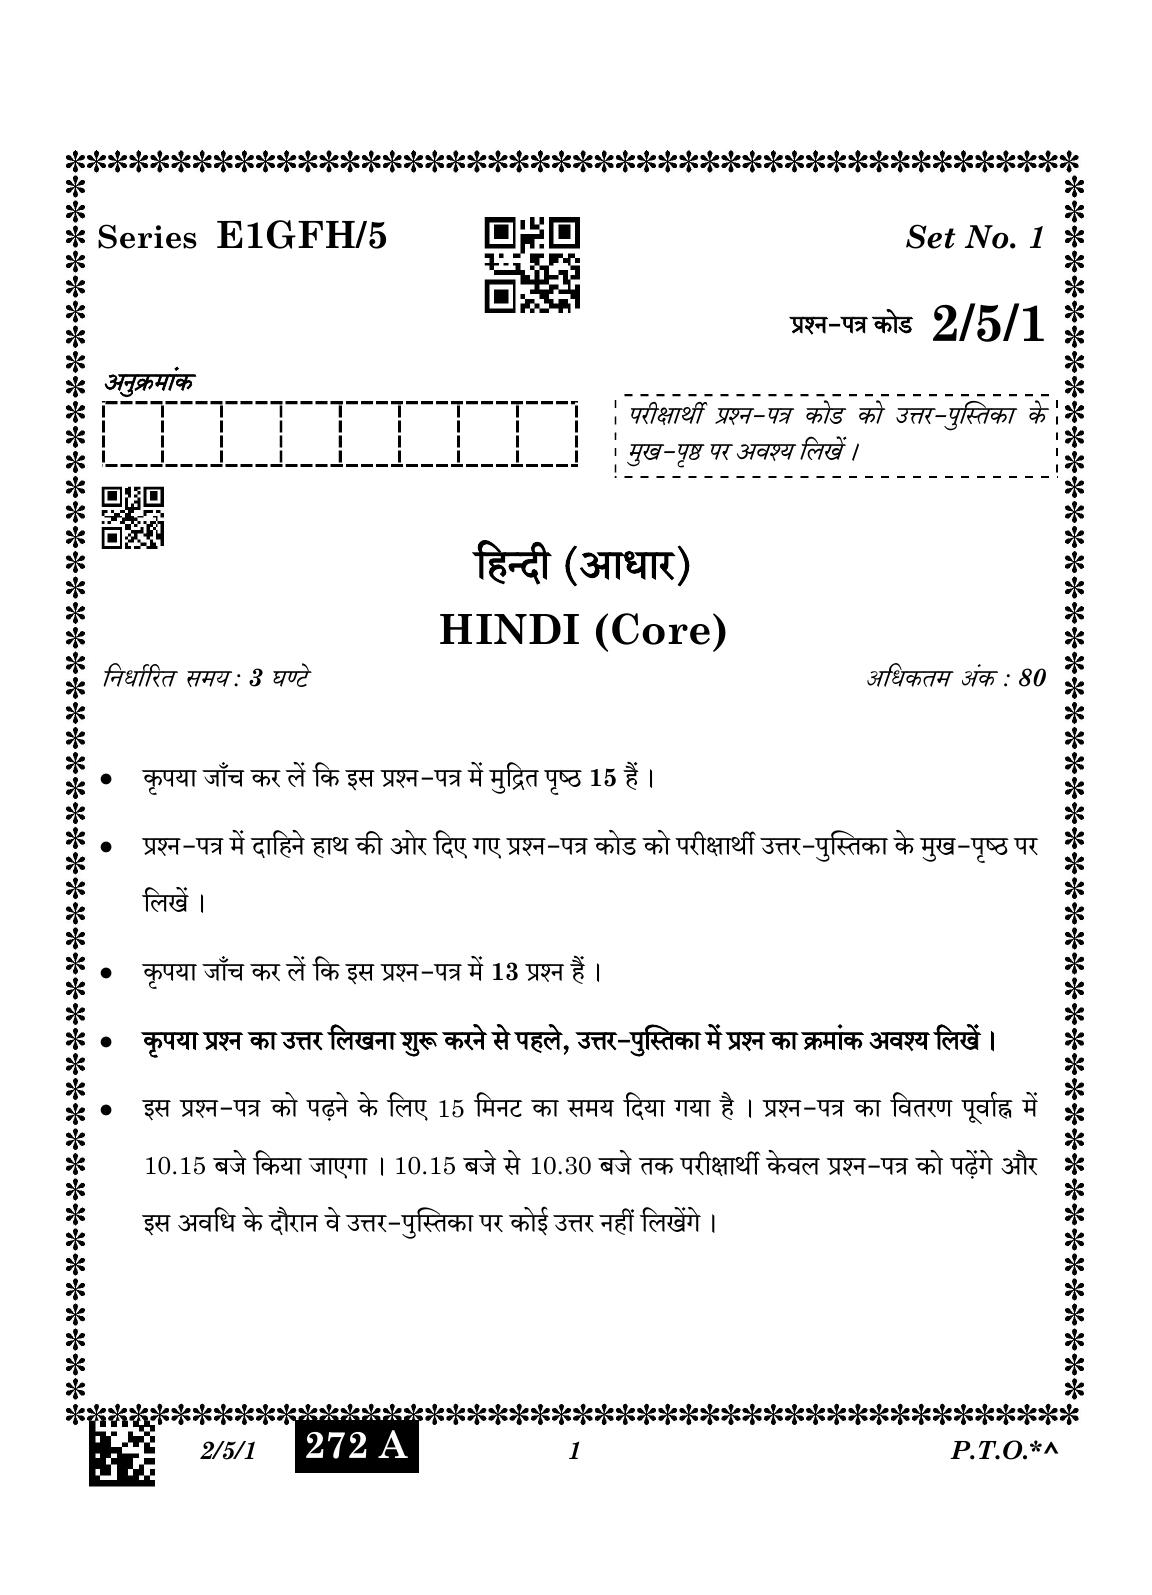 CBSE Class 12 2-5-1 Hindi Core version 2023 Question Paper - Page 1